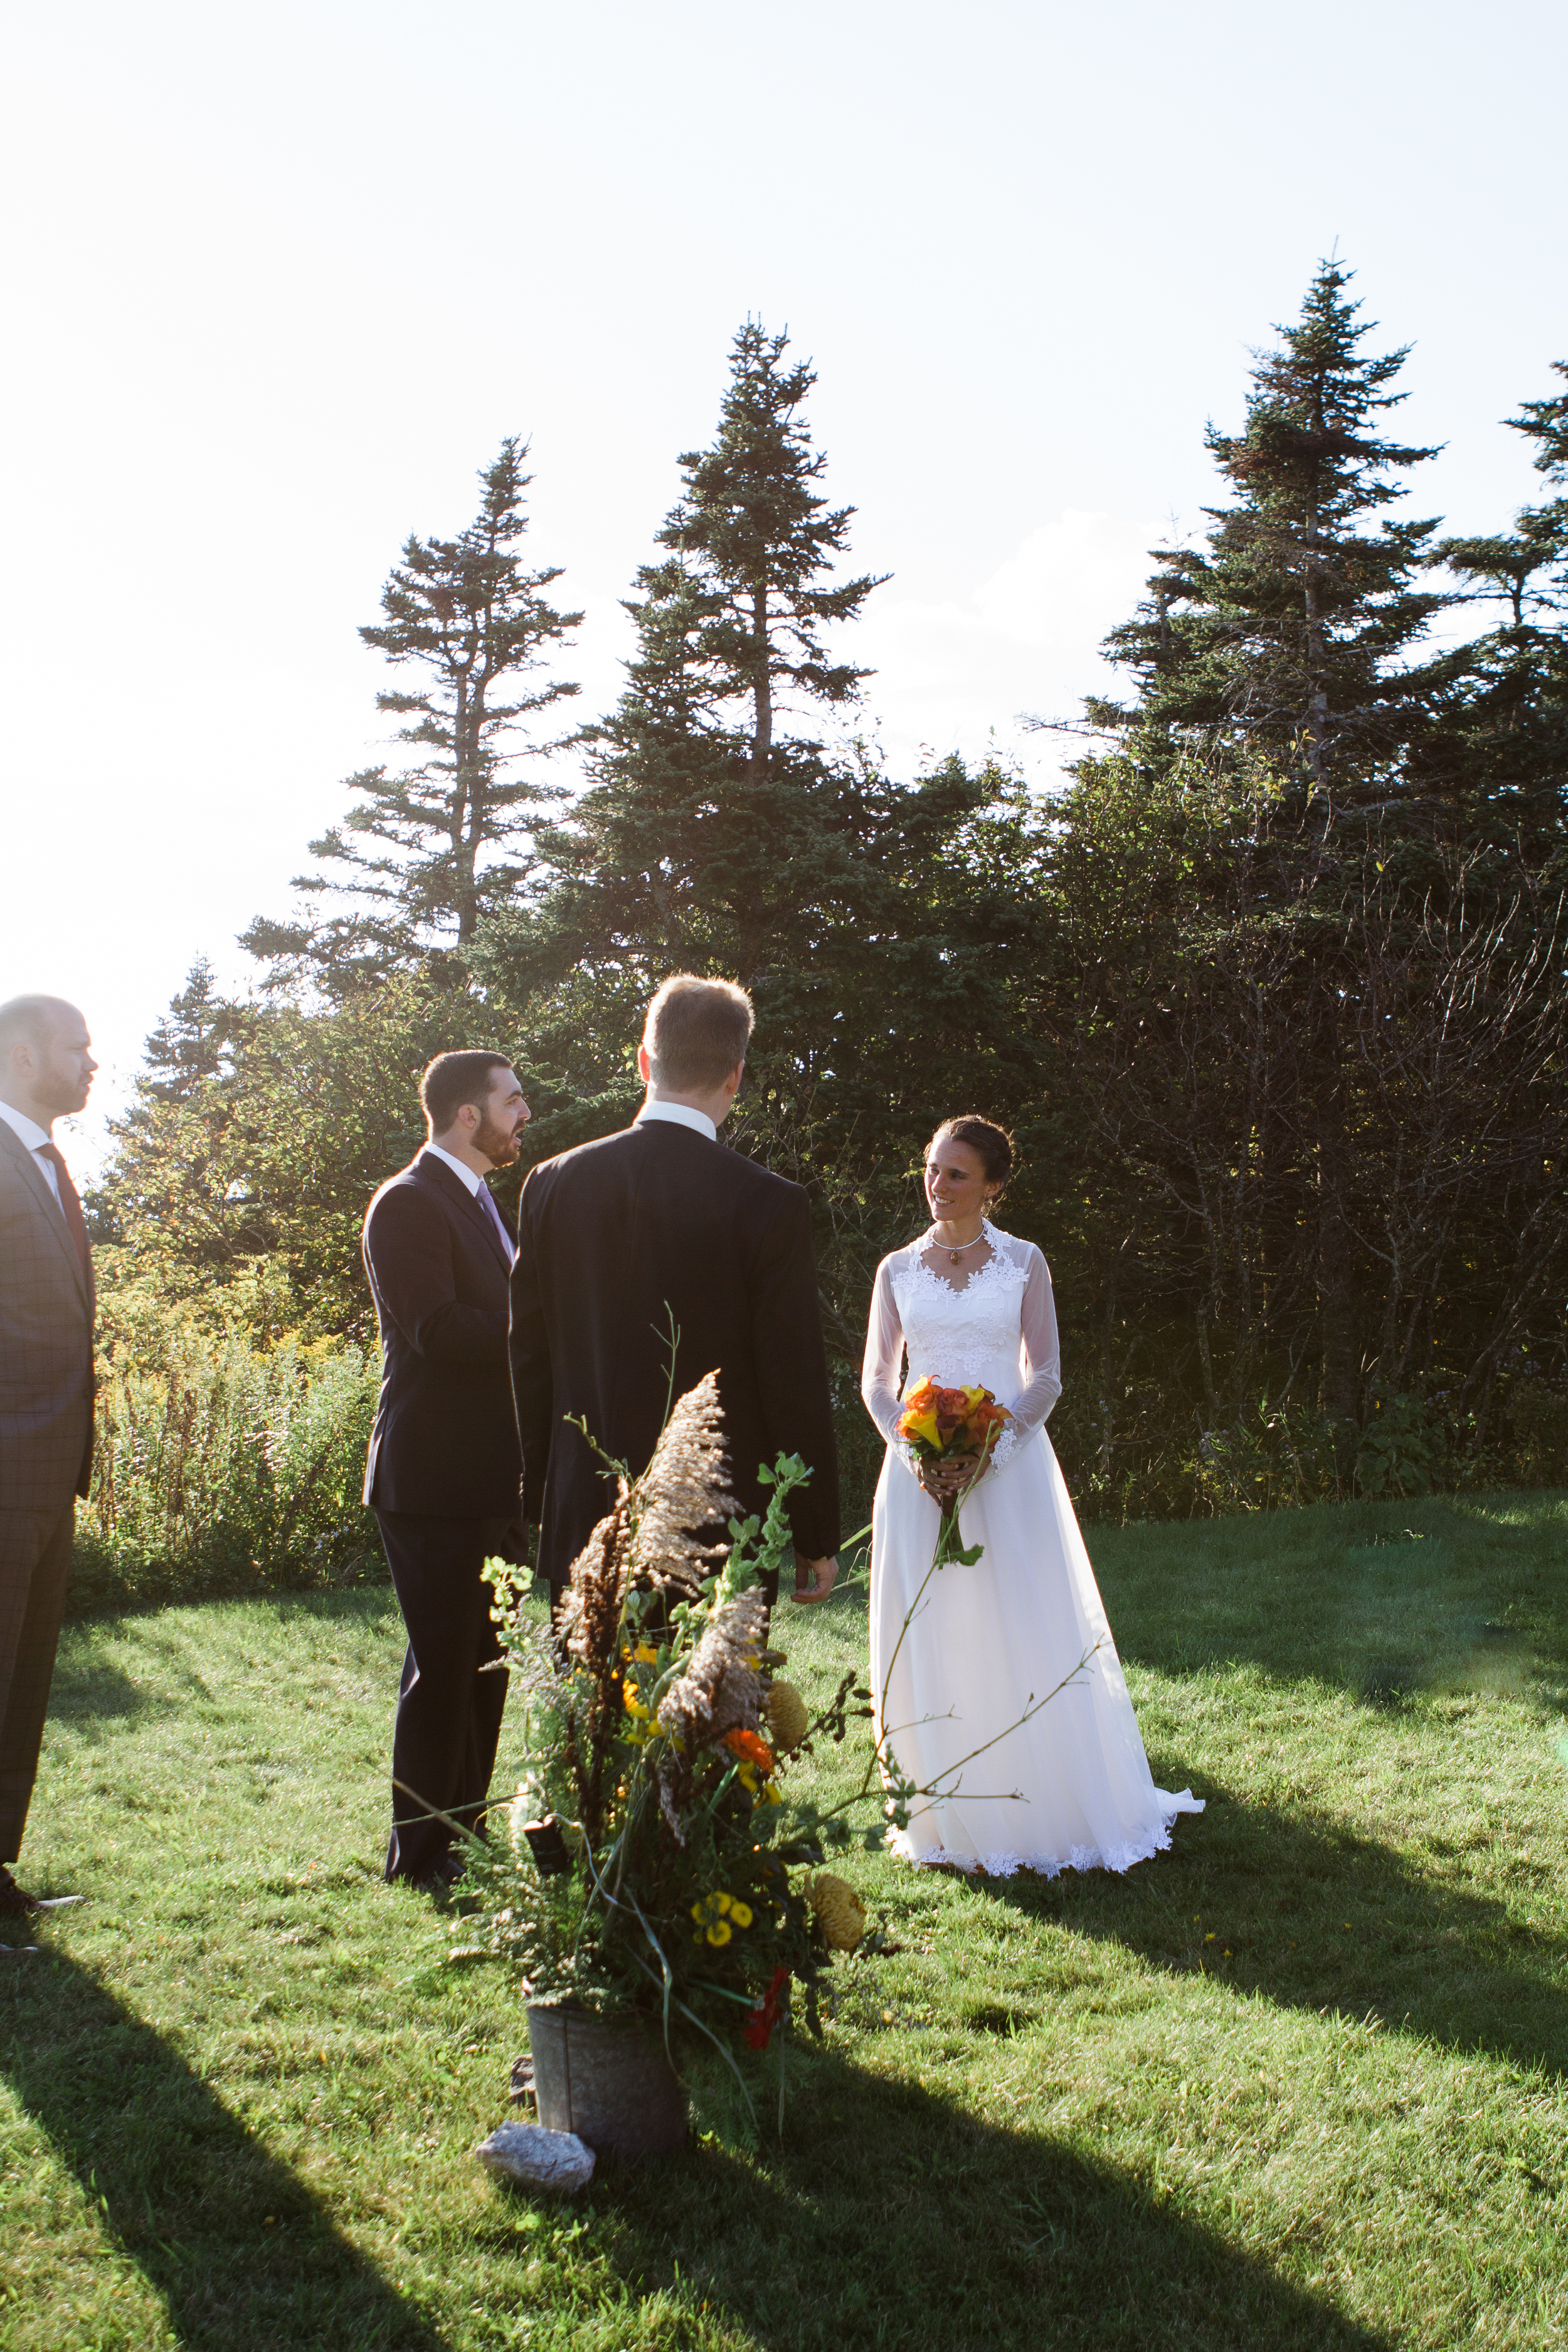 Lauren and Eyvi Bascom Lodge Mt. Greylock Berkshires Massachusetts Mountain Wedding Shannon Sorensen Photography